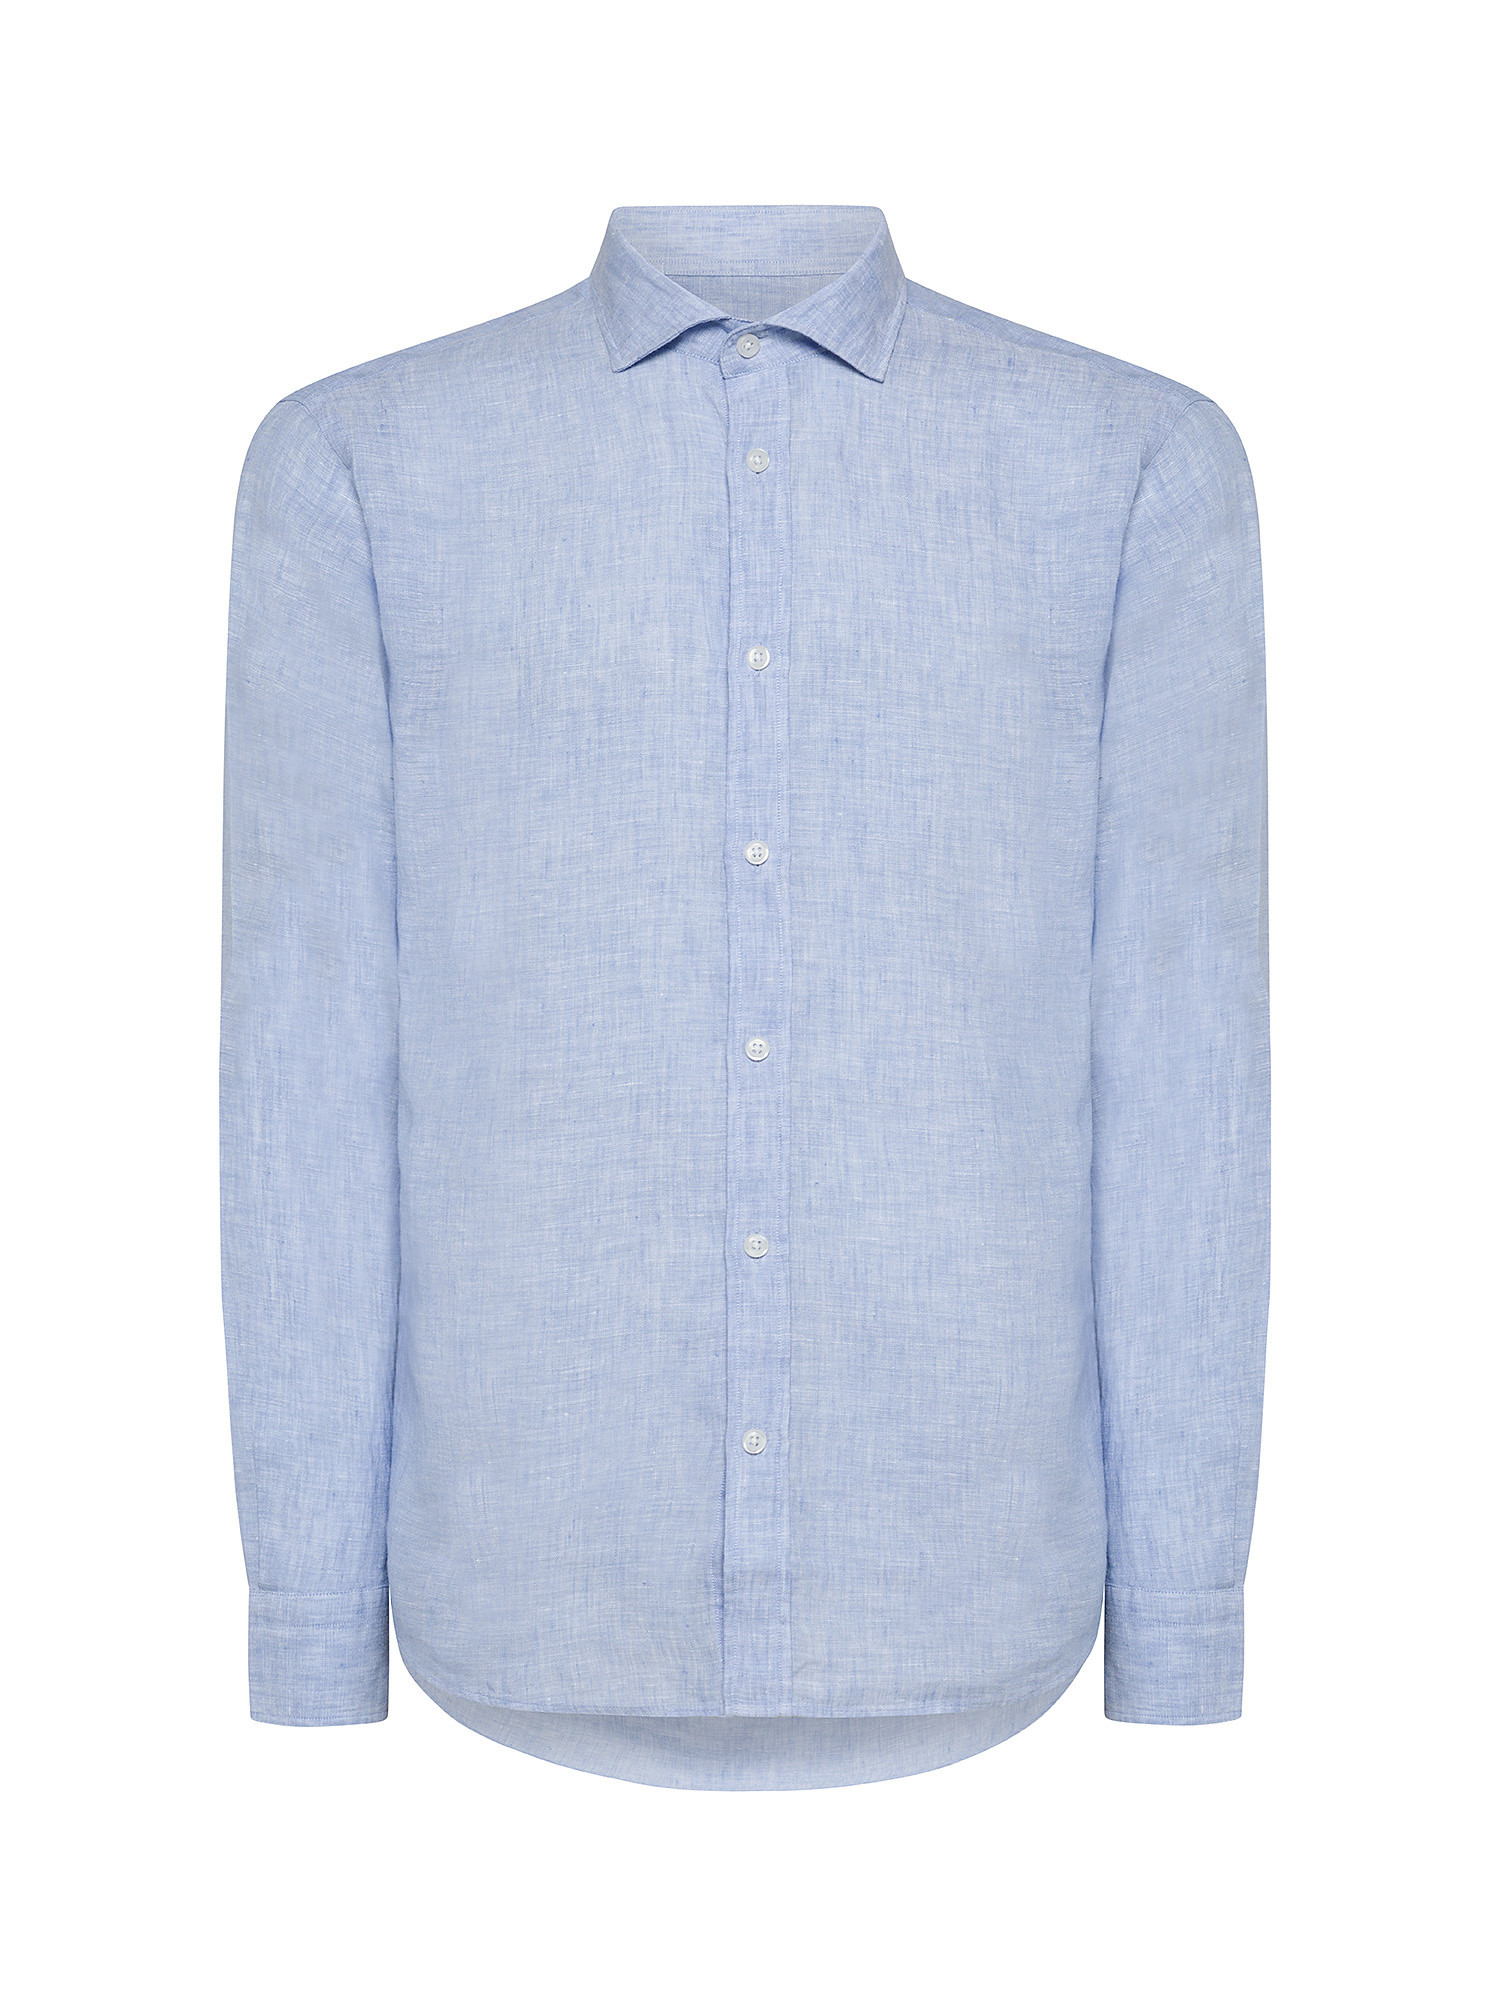 Luca D'Altieri - Tailor fit shirt in pure linen, Light Blue, large image number 0